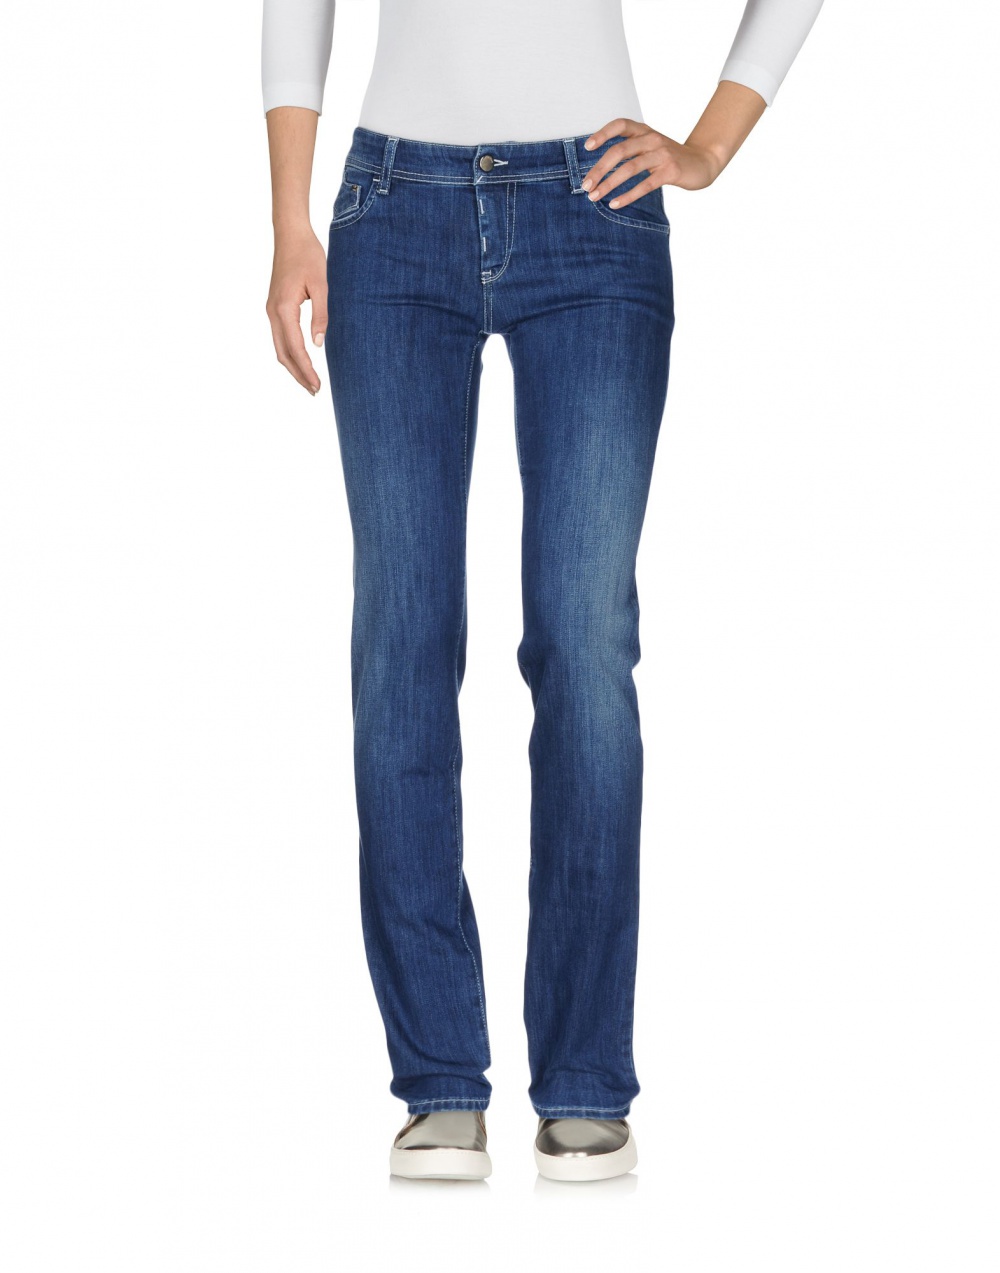 Armani Jeans джинсы новые Армани 24 размер